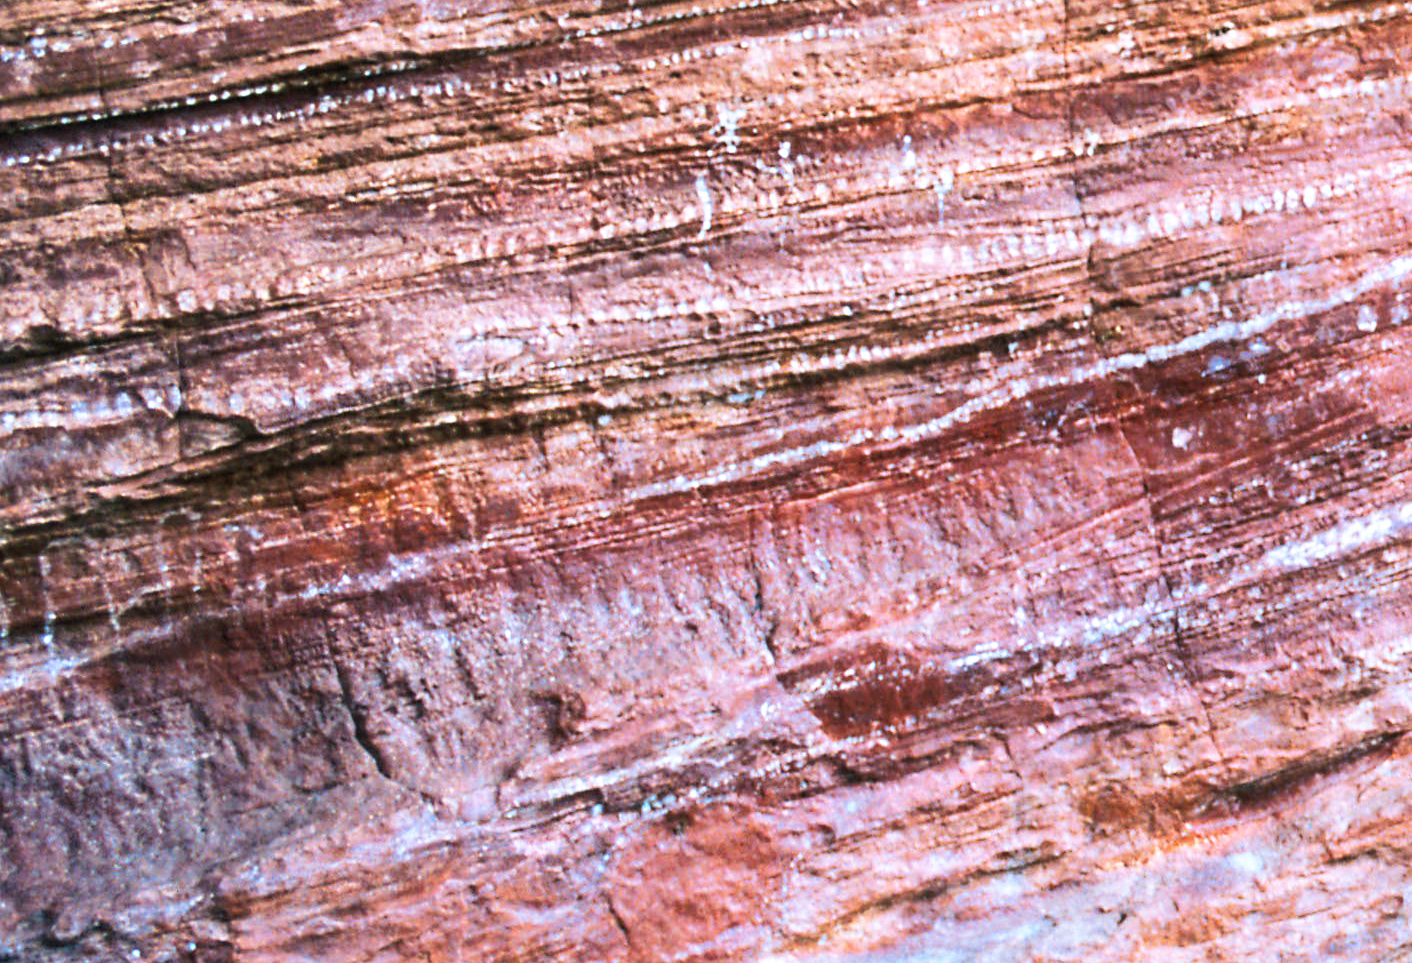 Aboriginal rock art dating